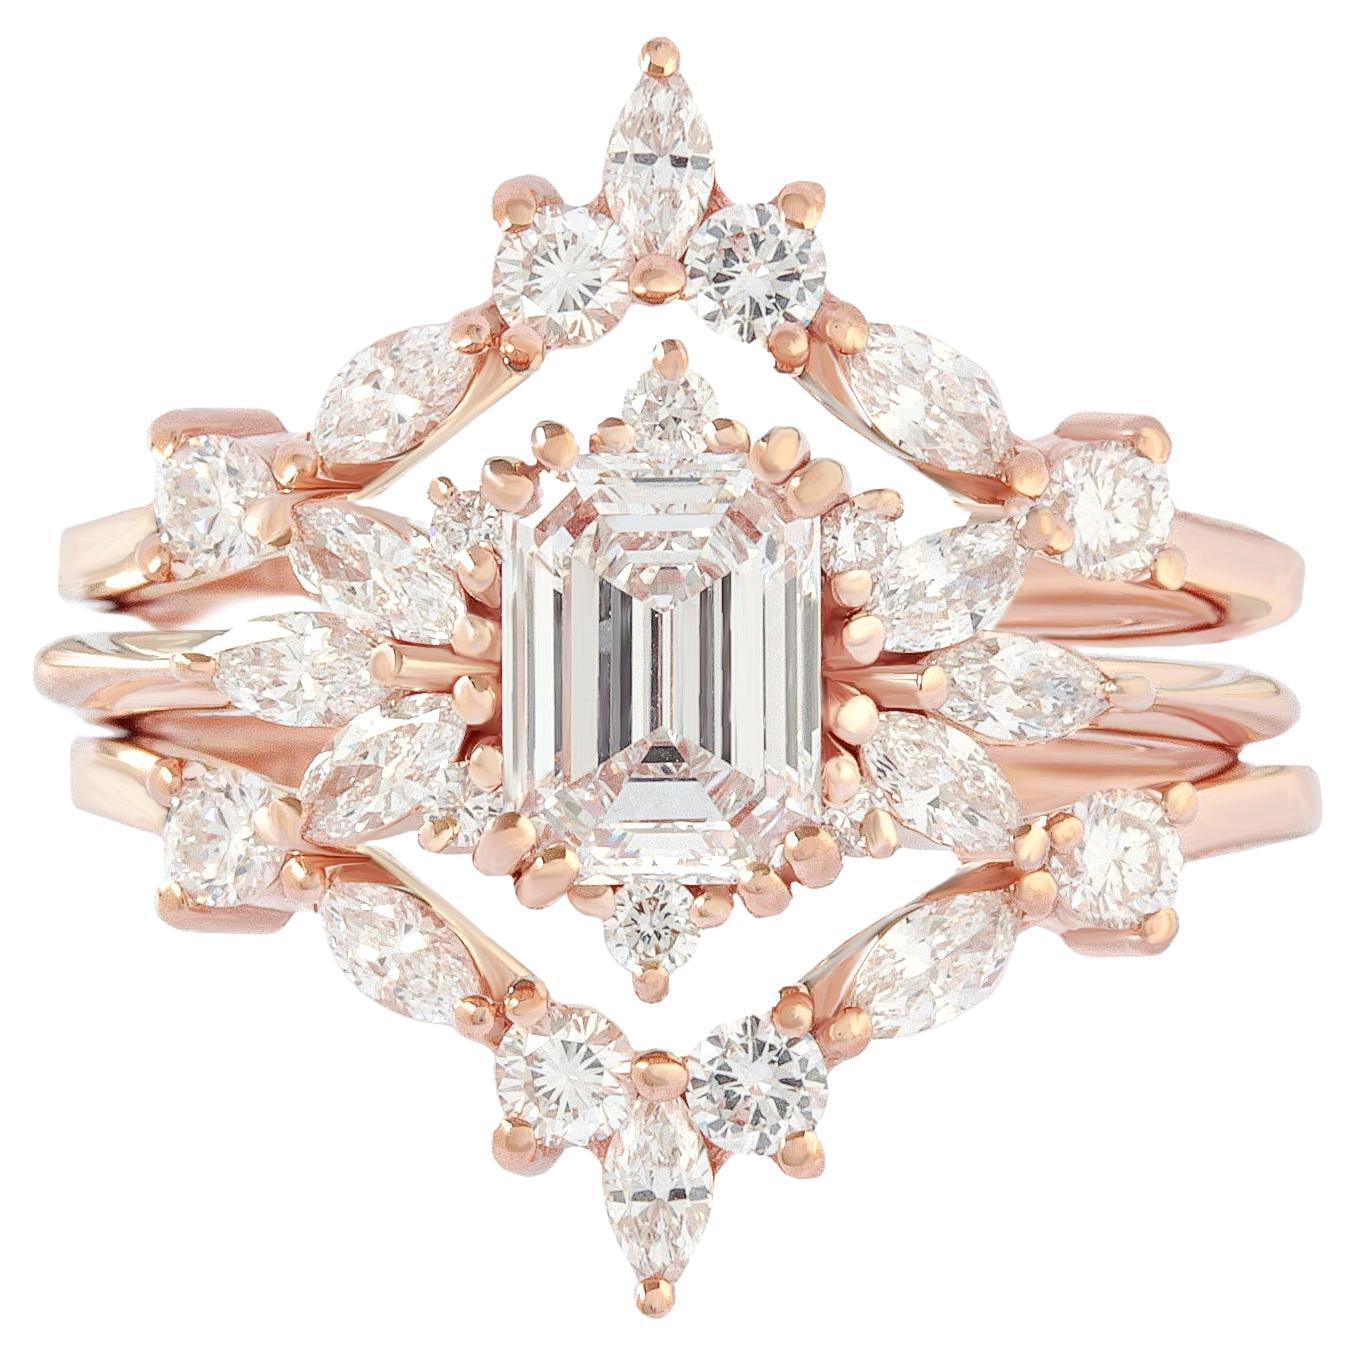 Emerald Cut Diamond Bridal Ring Set "Spark" & "Iceland" Nesting Rings